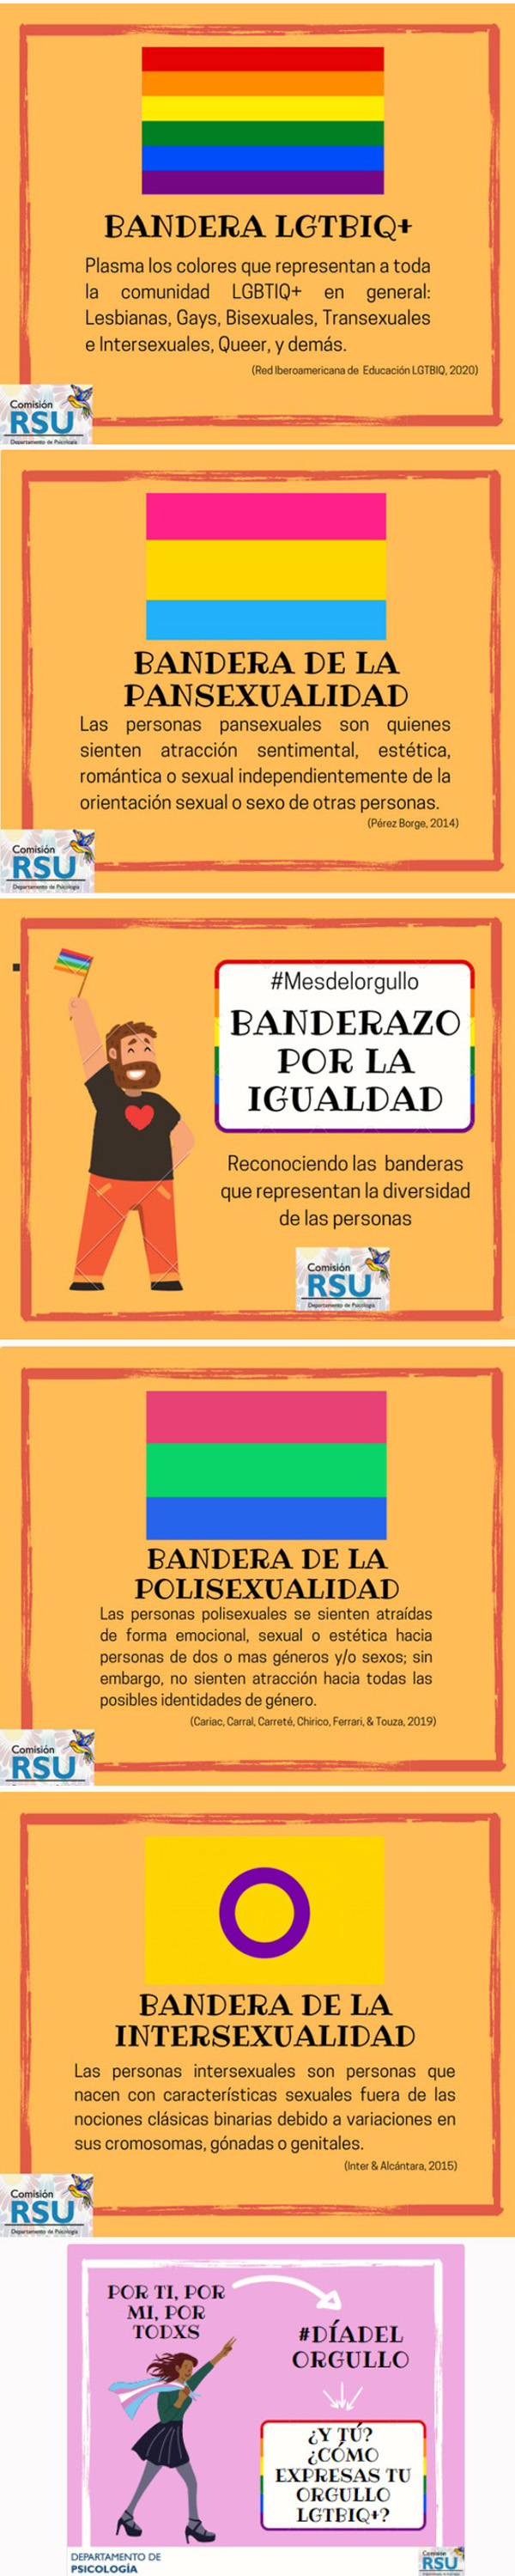 Pontifical University in Peru - Gay pride 3